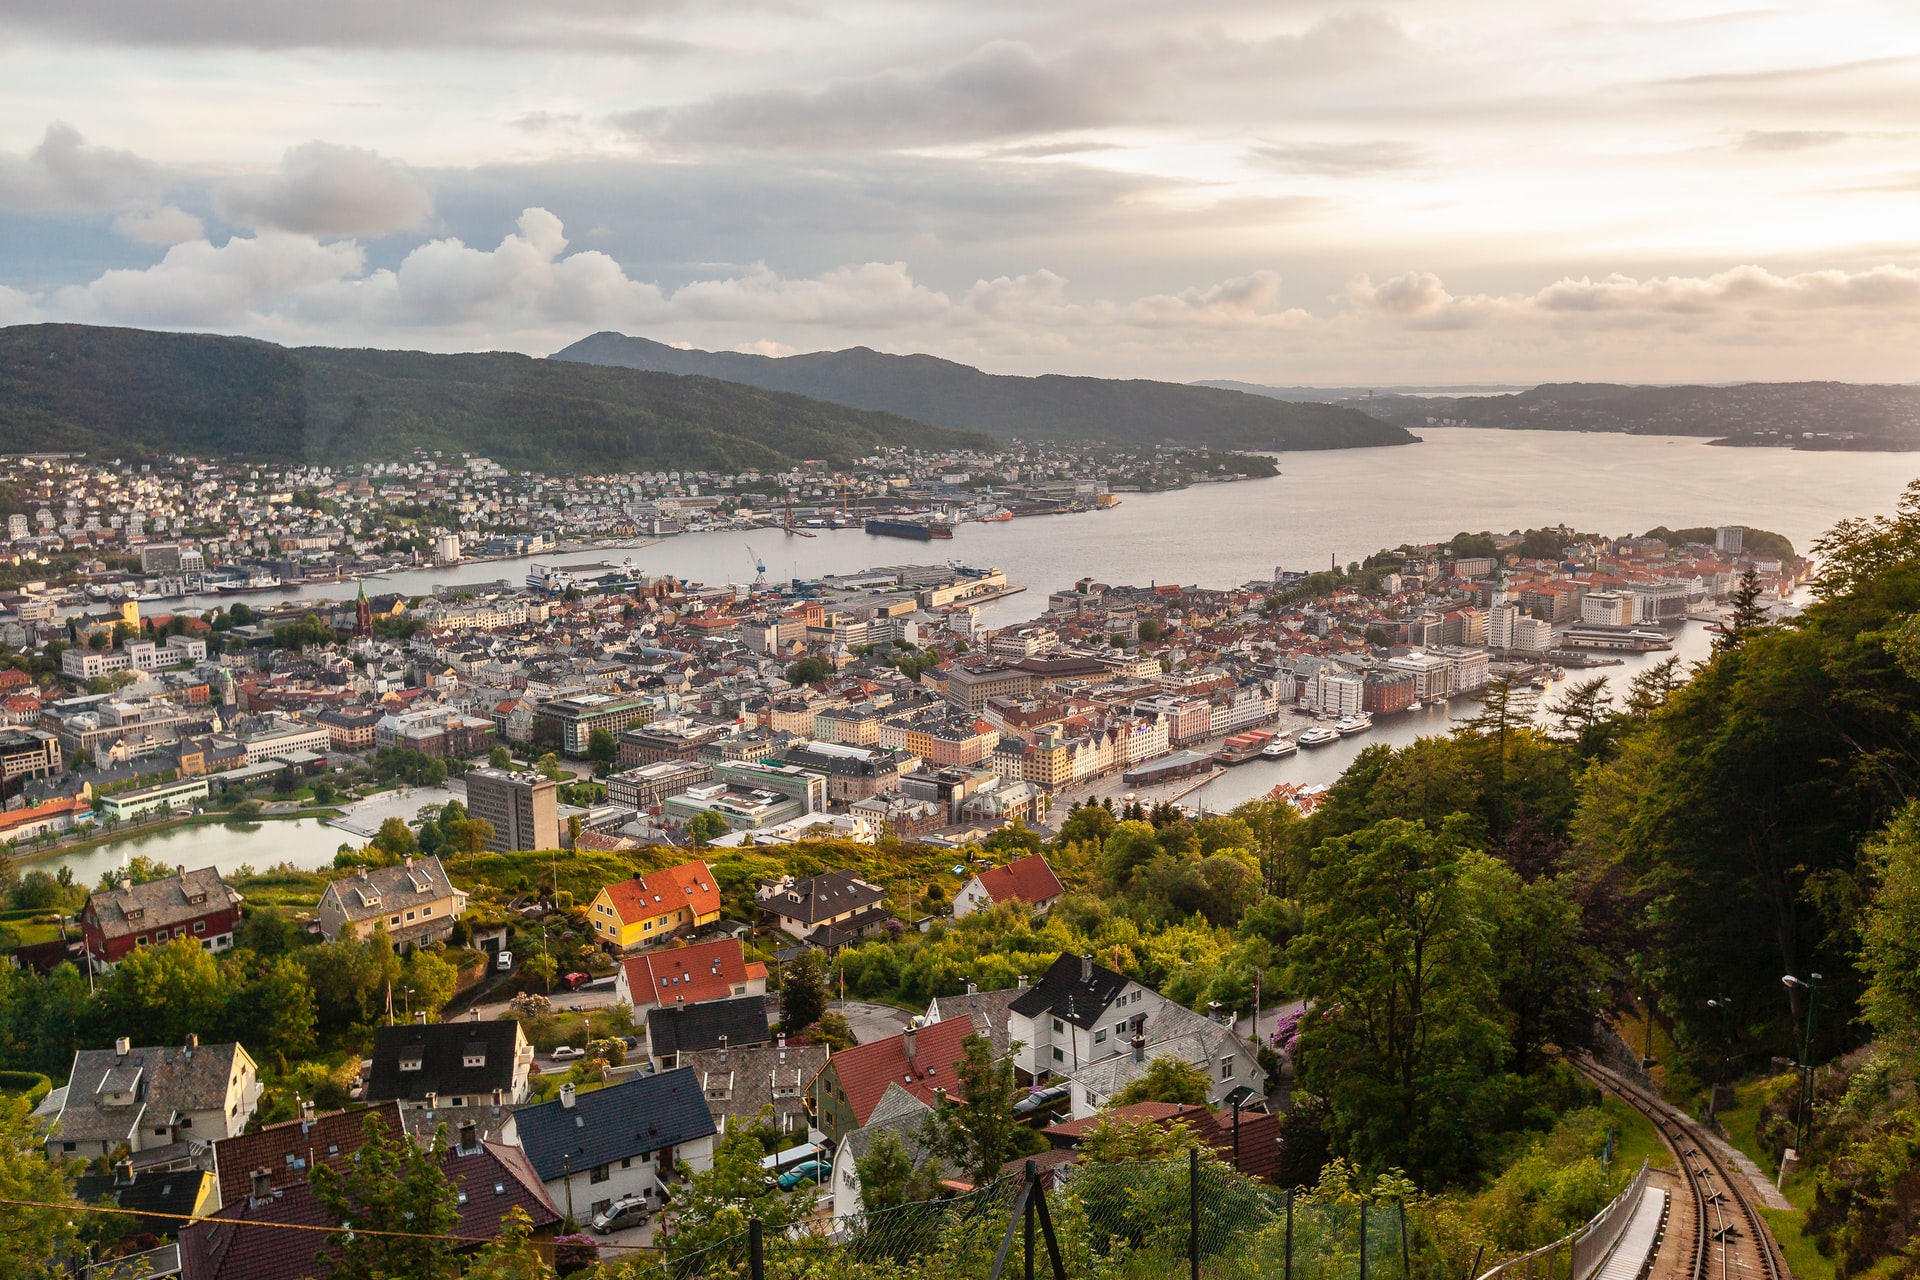 Nordic municipalities are embracing data-driven urban planning